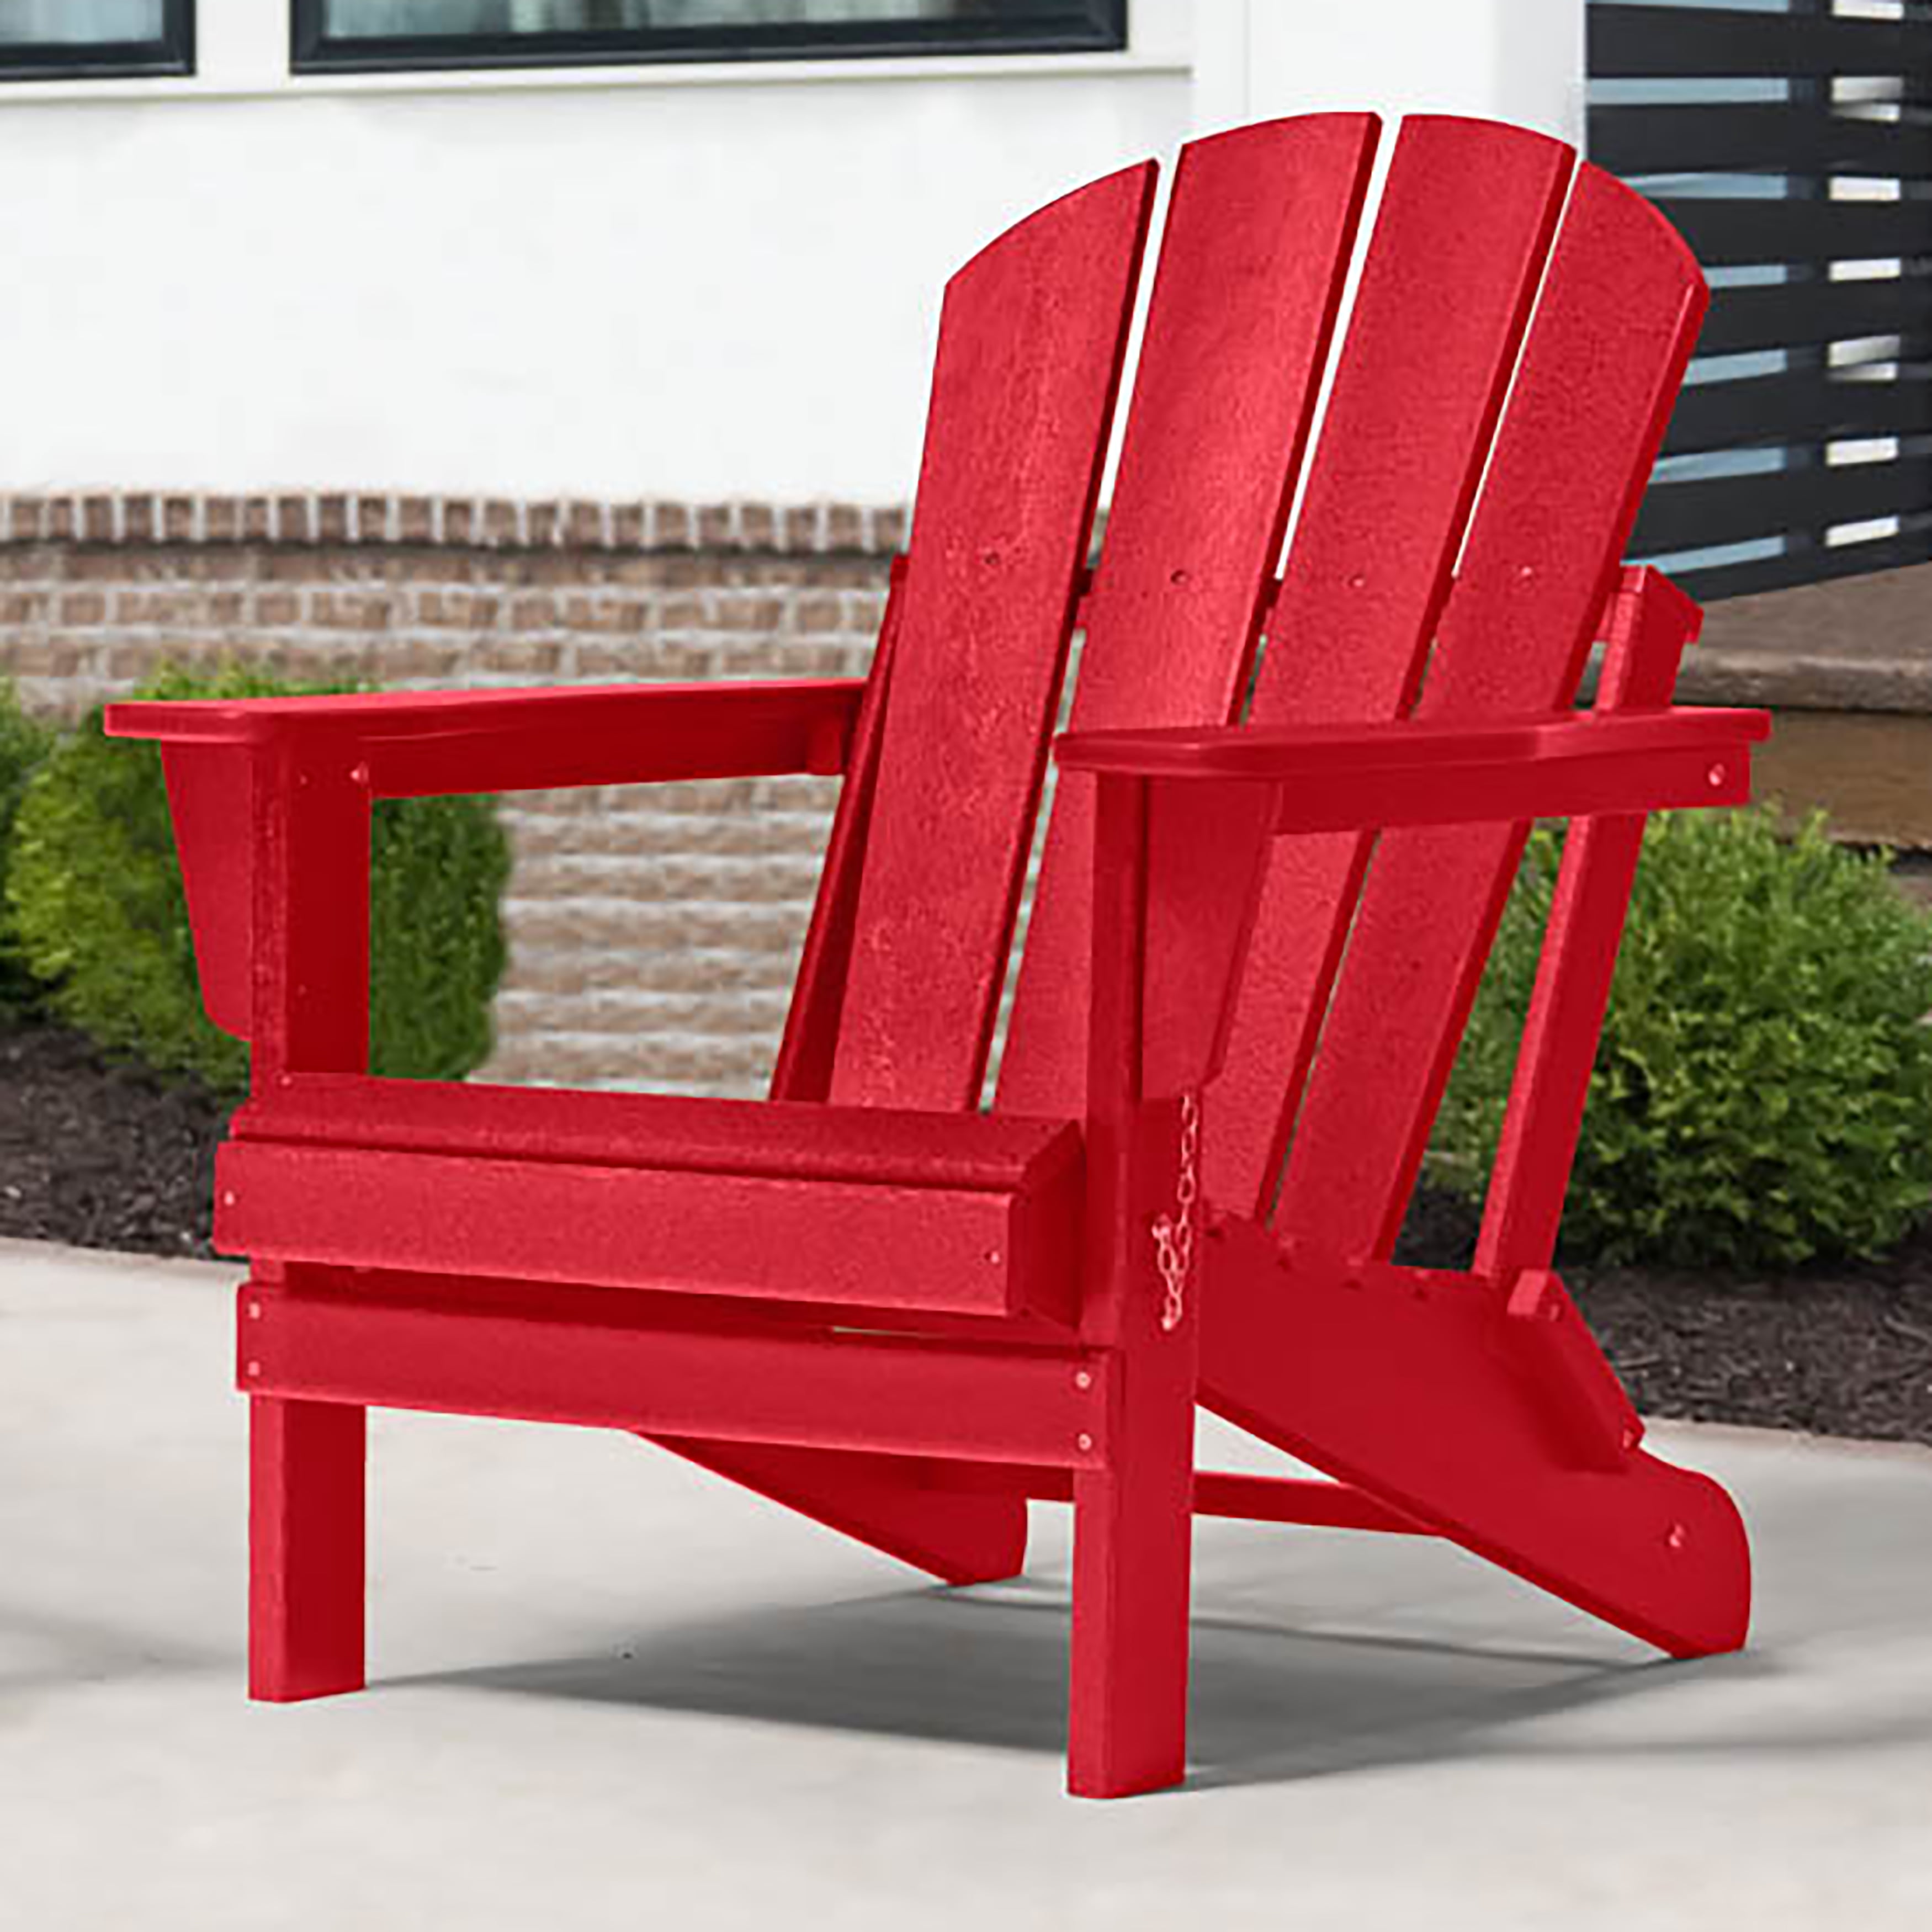 Braxton Folding Plastic Adirondack Chair, Red Walmart